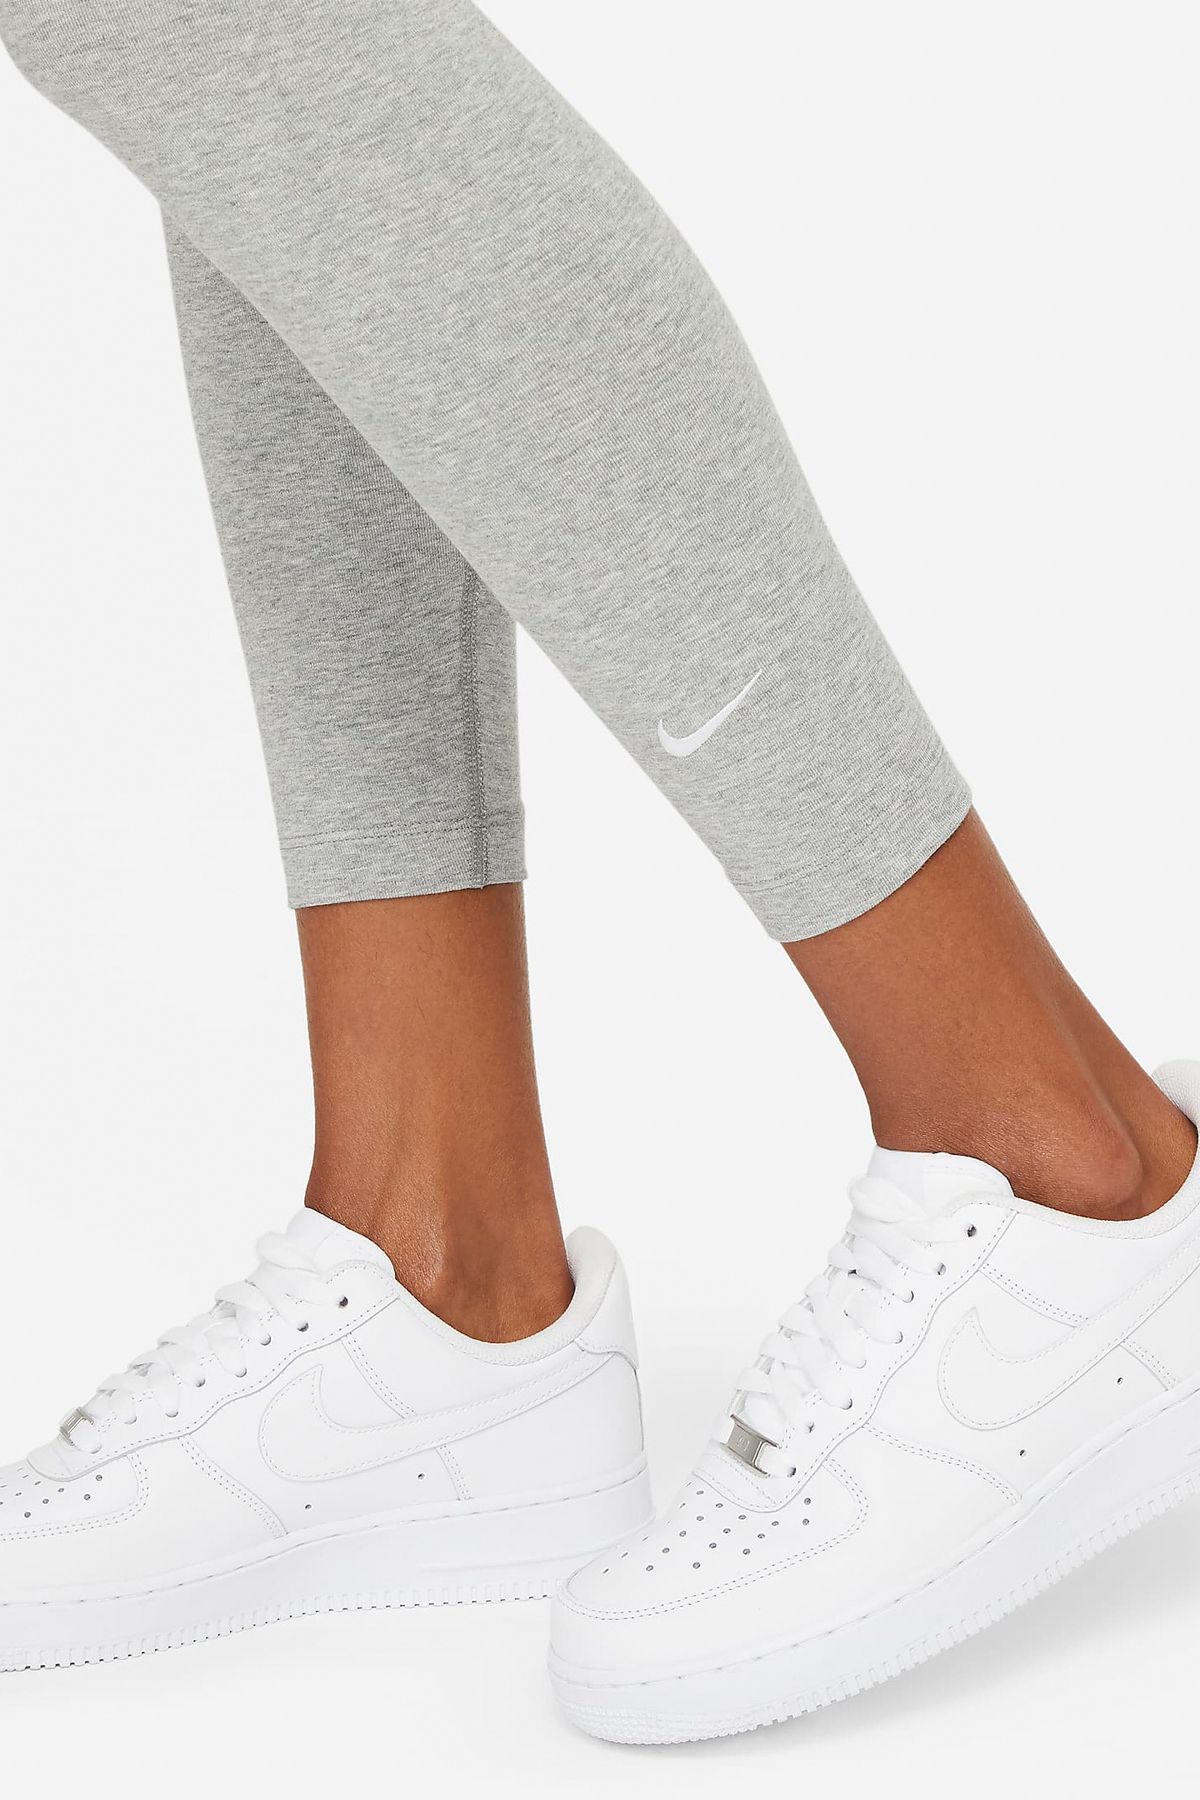 Nike Women's Sports Tights - Essential - CZ8532-063 - Trendyol